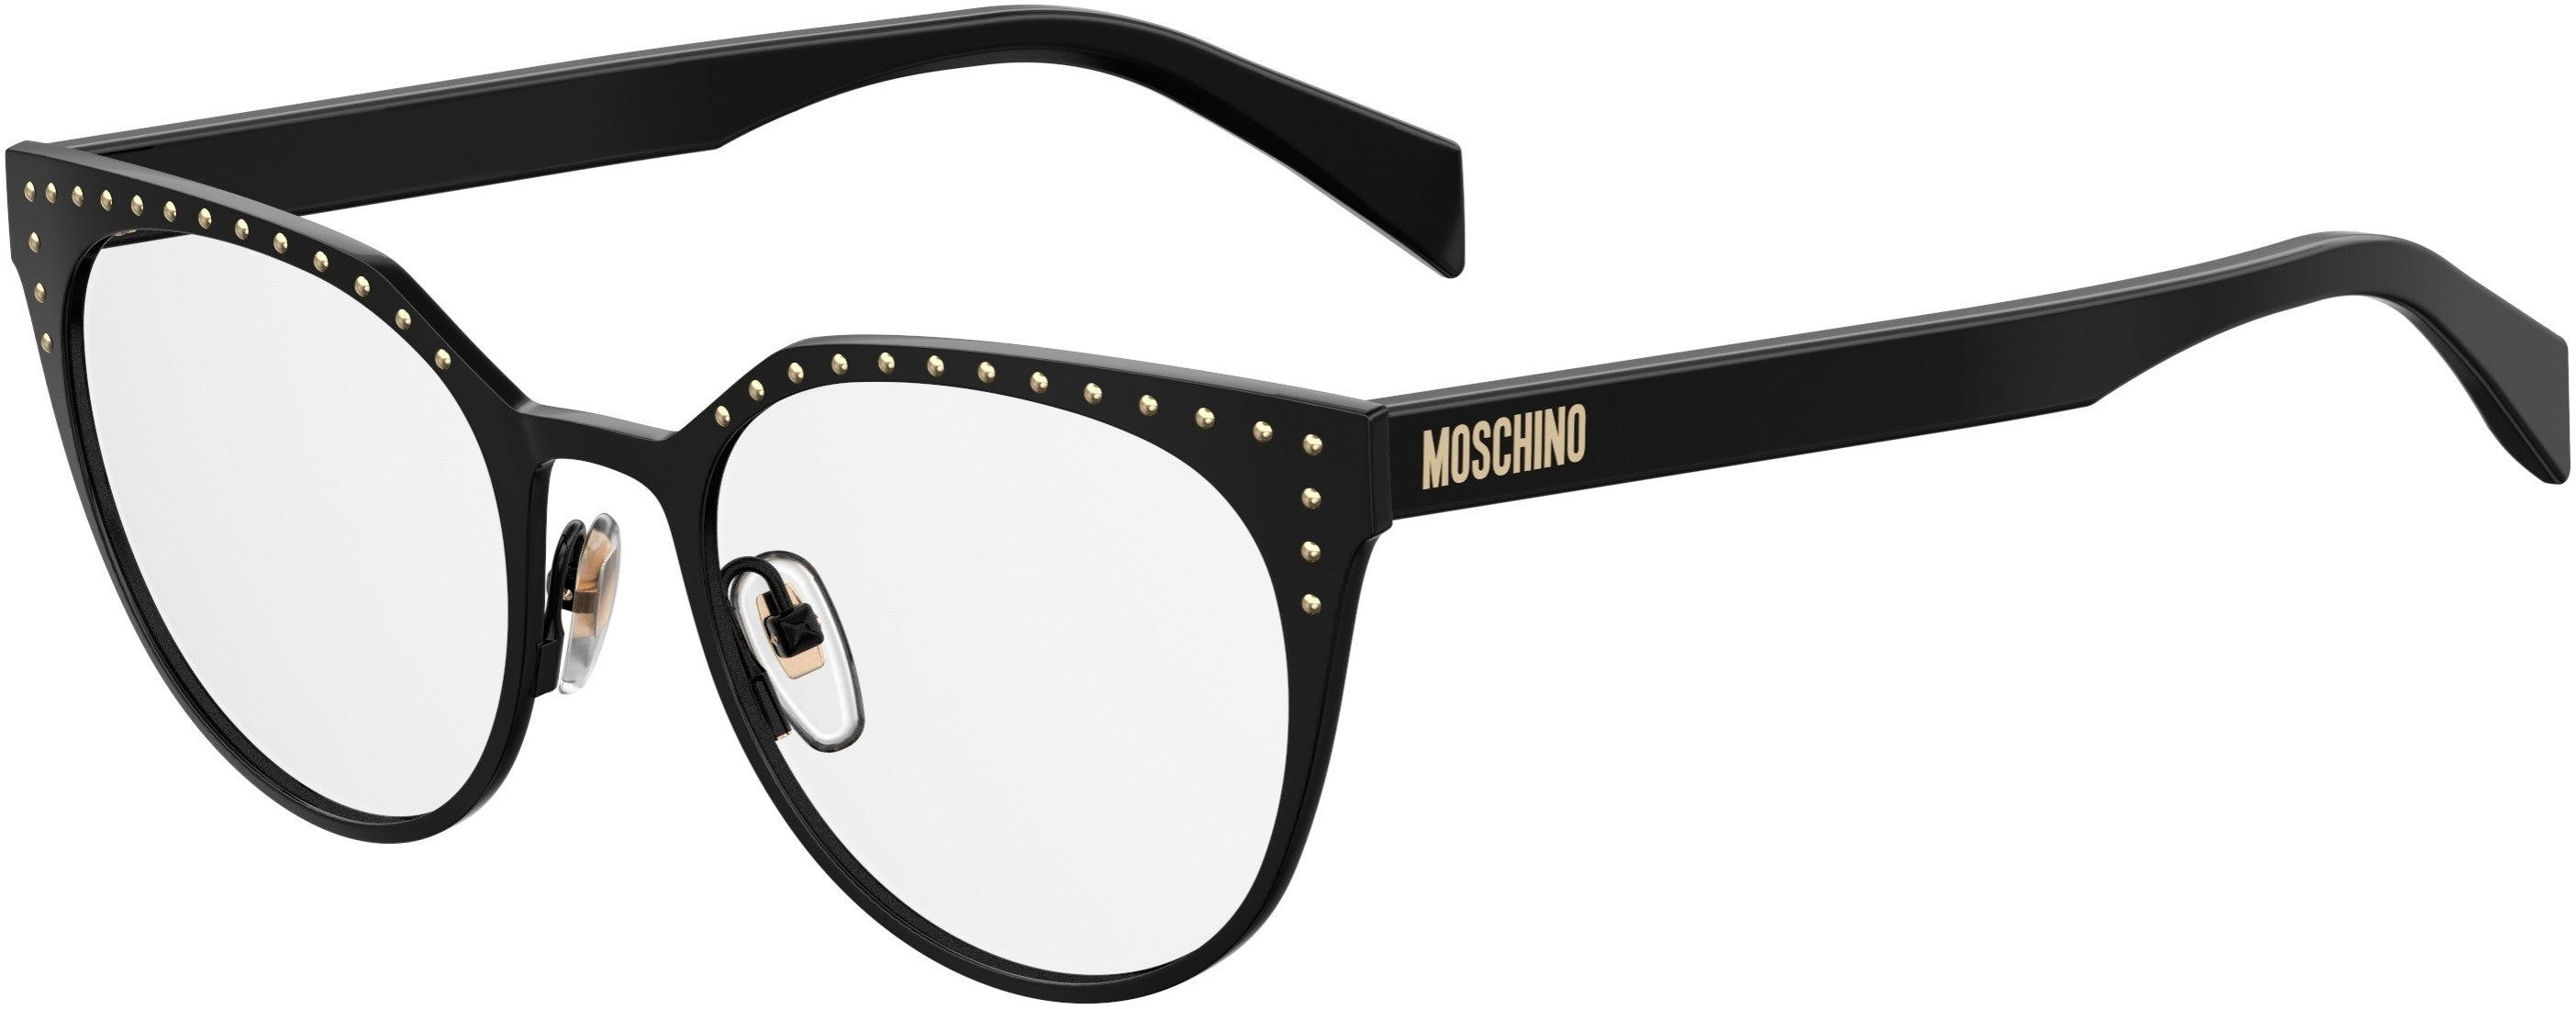  Moschino 512 Tea Cup Eyeglasses 0807-0807  Black (00 Demo Lens)